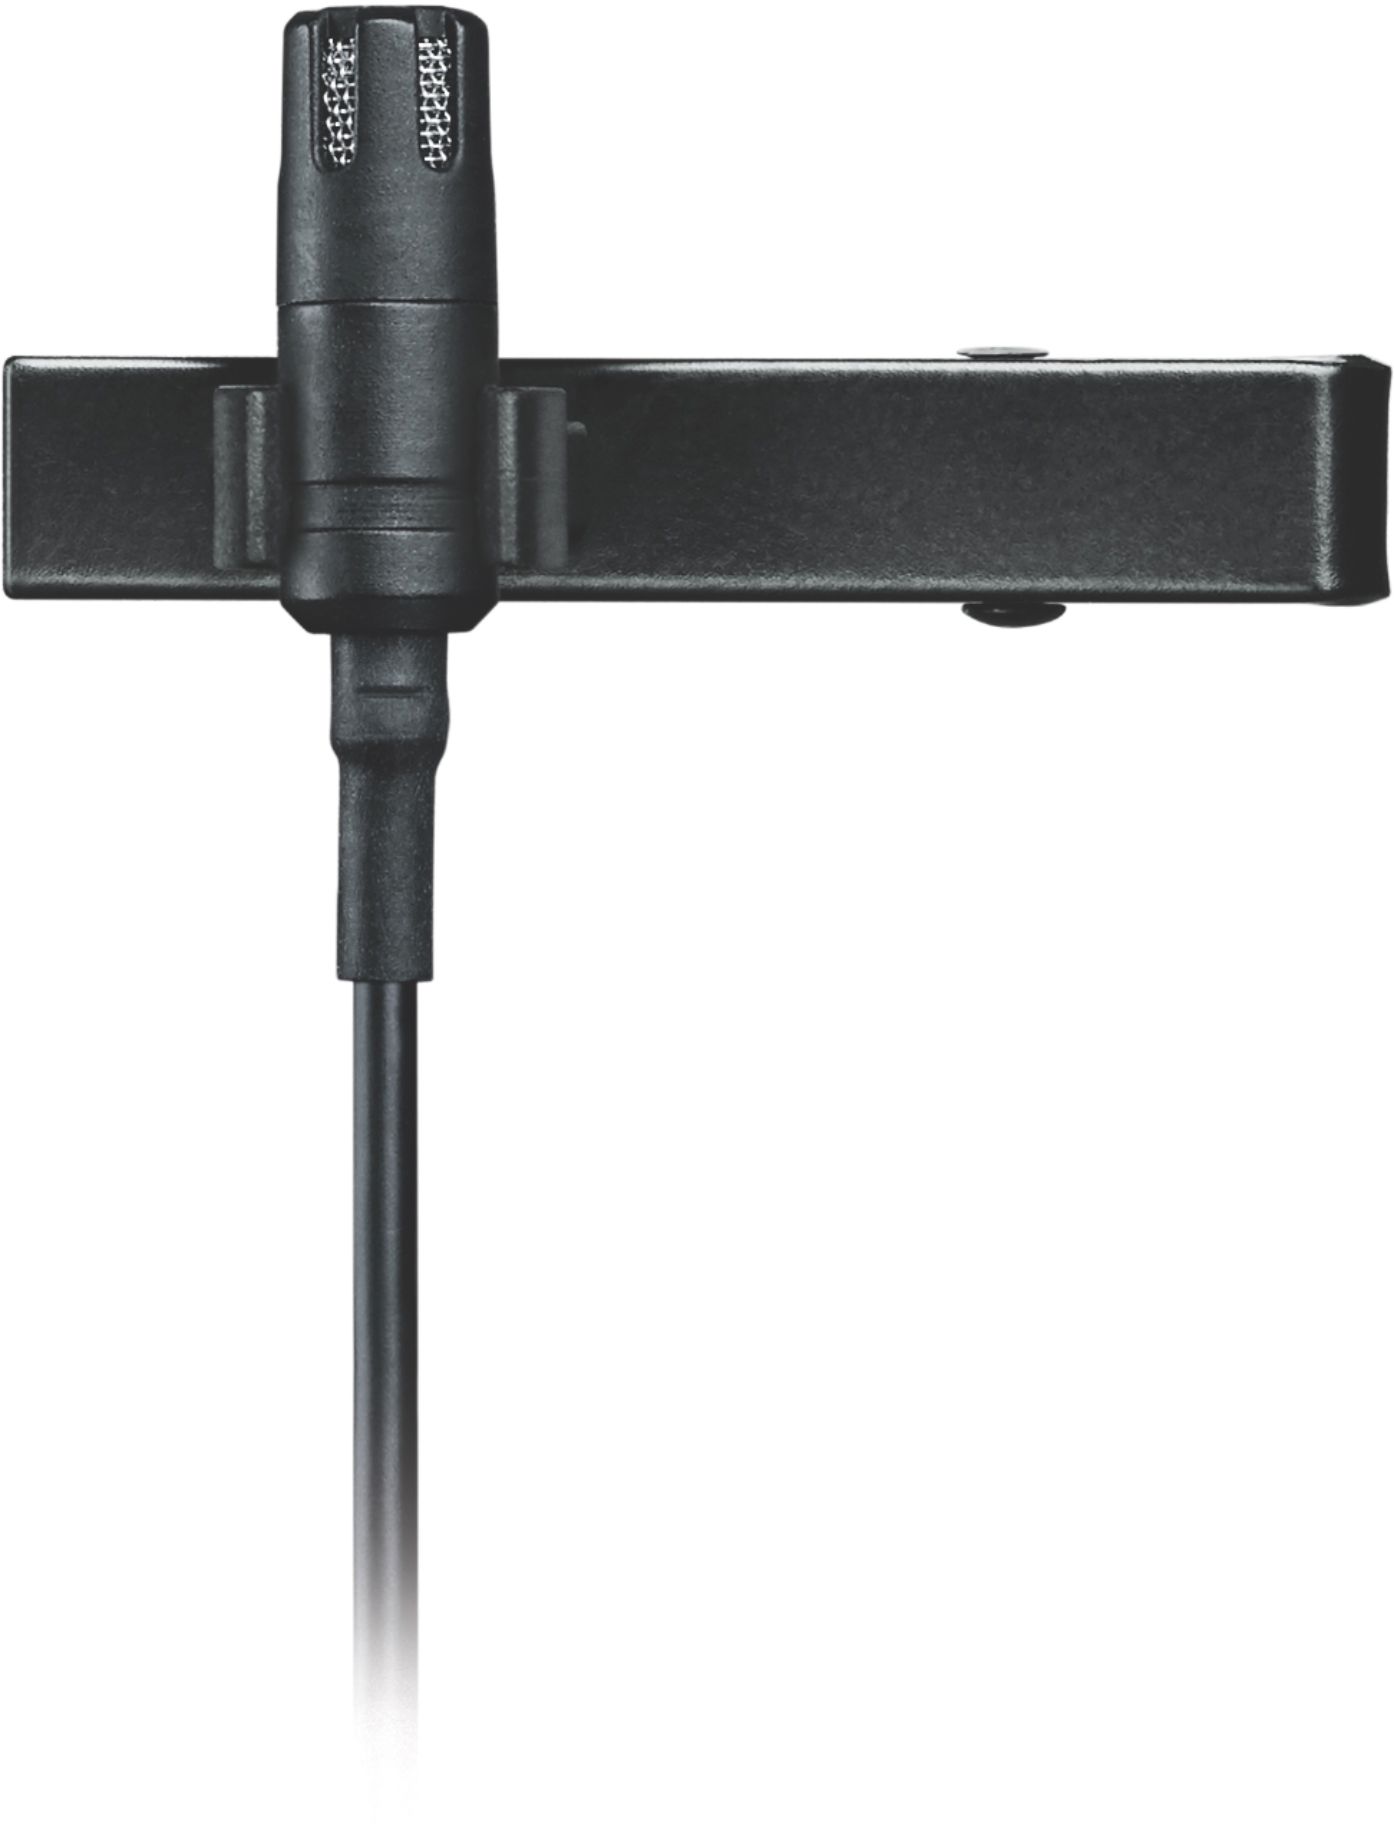 Angle View: DM-E1 Directional Microphone for EOS Digital Camera